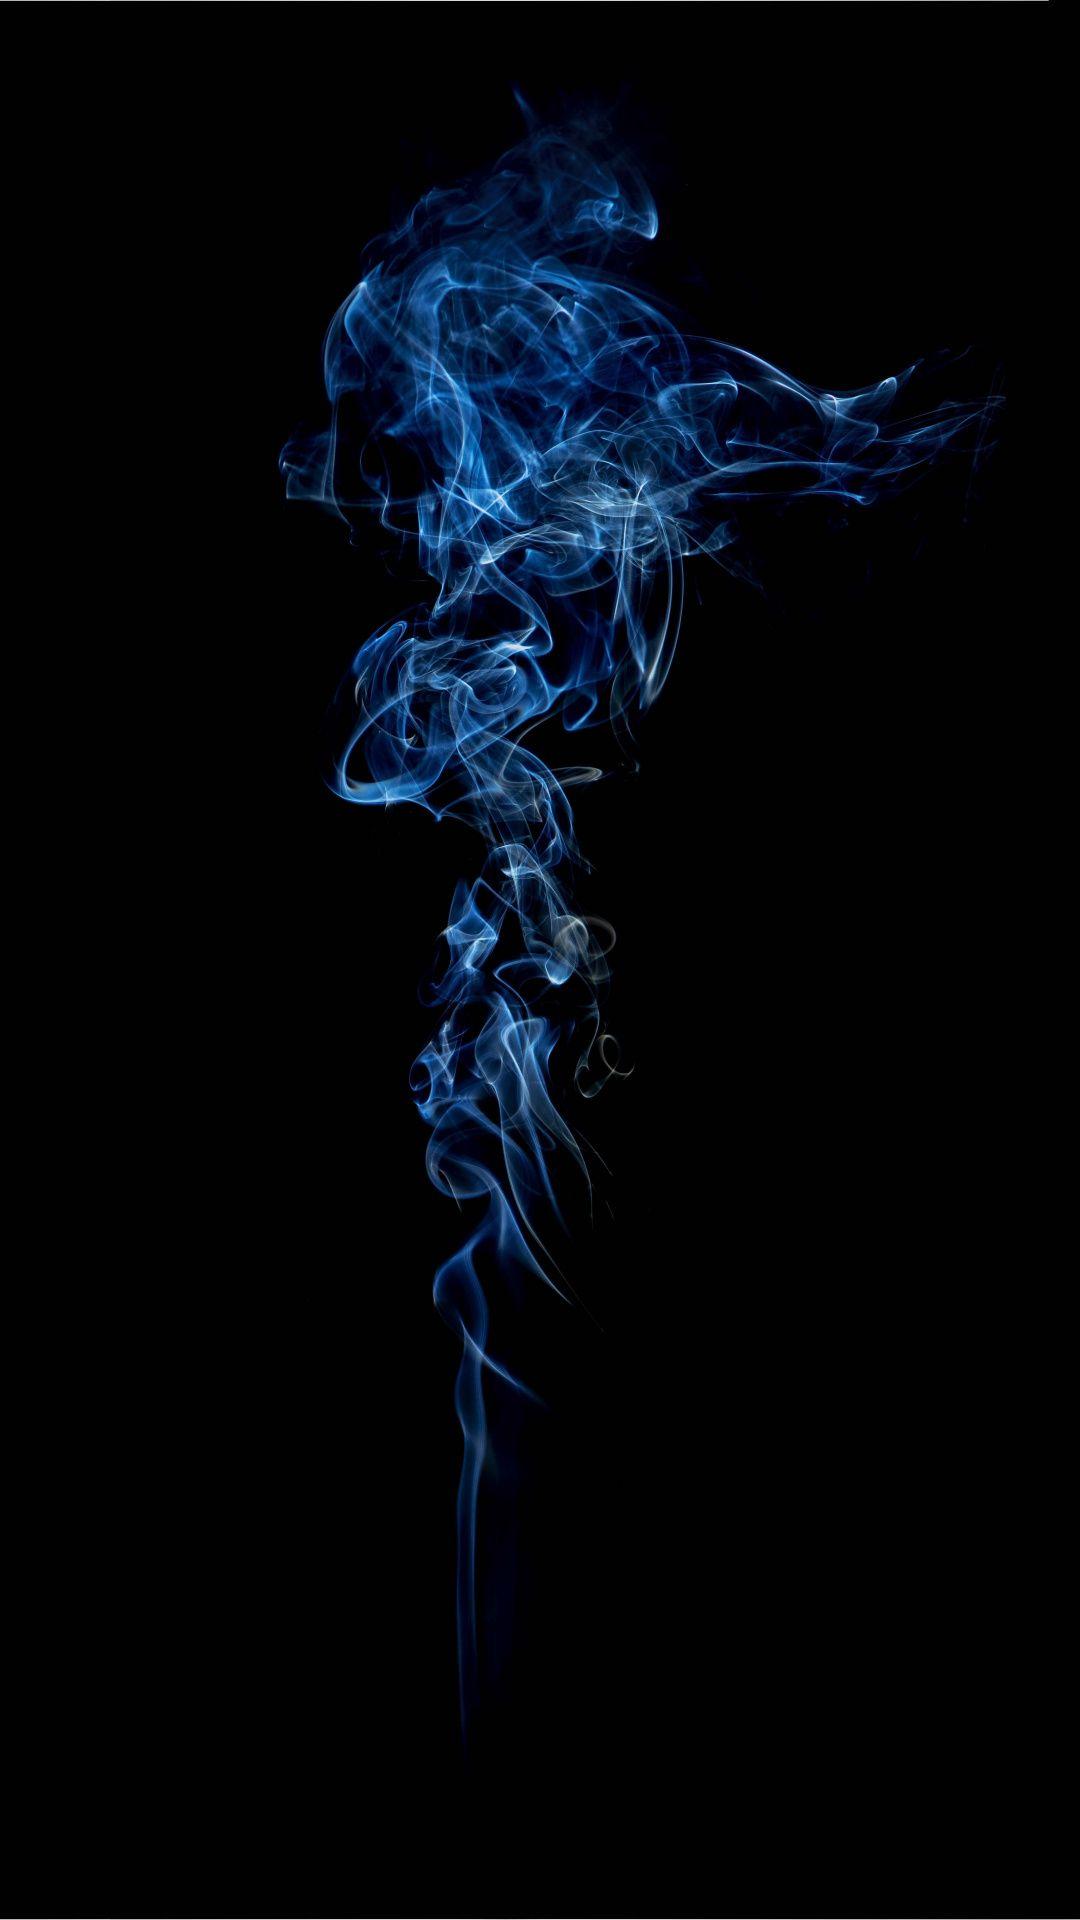 Minimal, blue, smoke Wallpaper. Smoke wallpaper